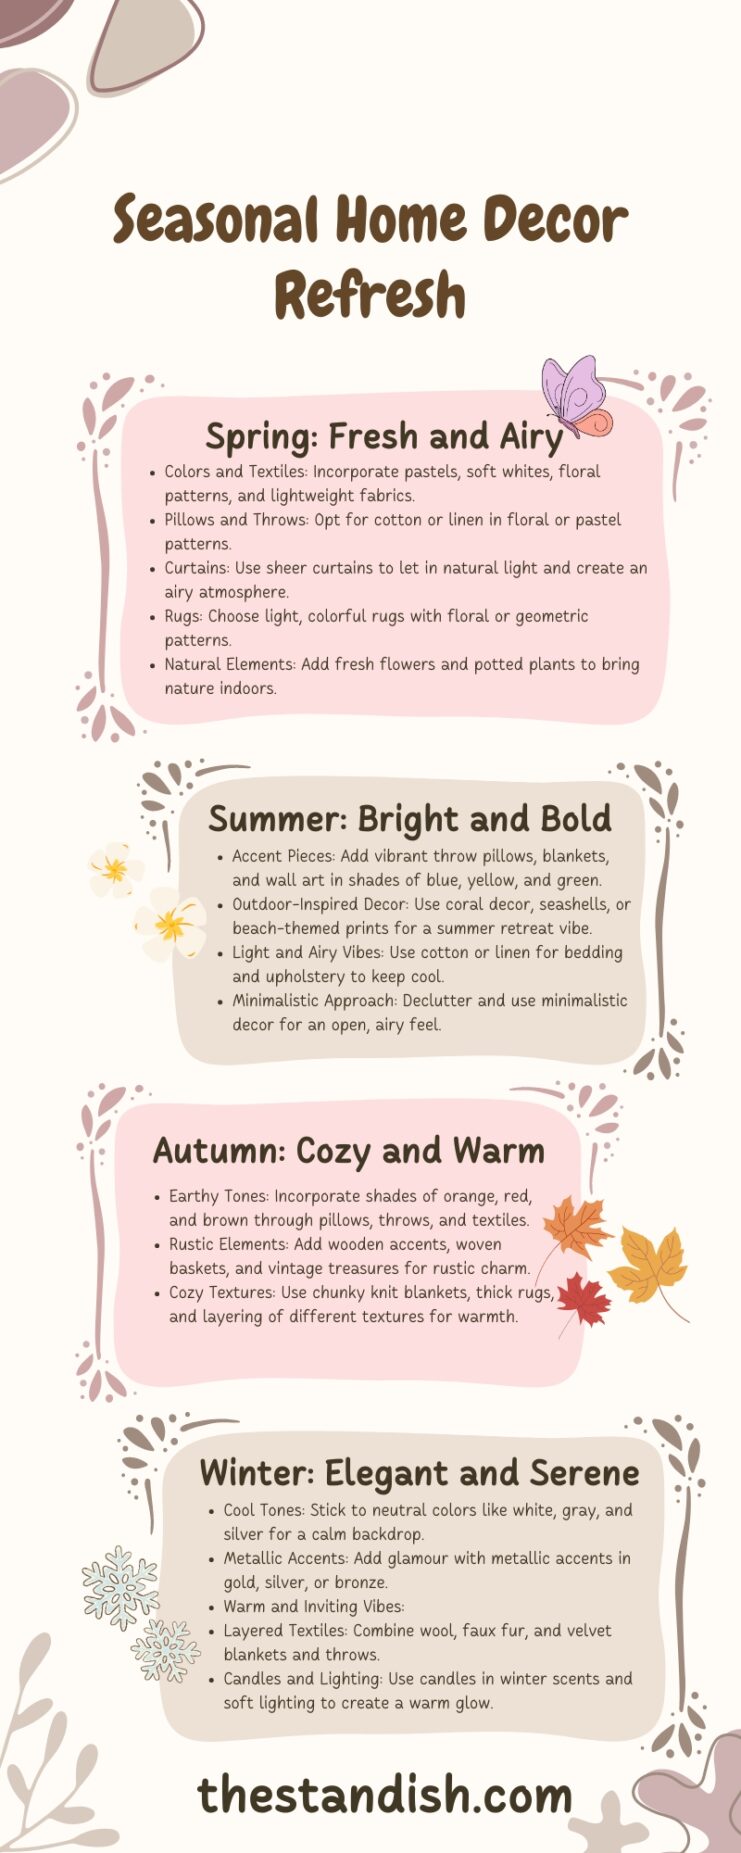 Seasonal Home Decor Refresh Infographic